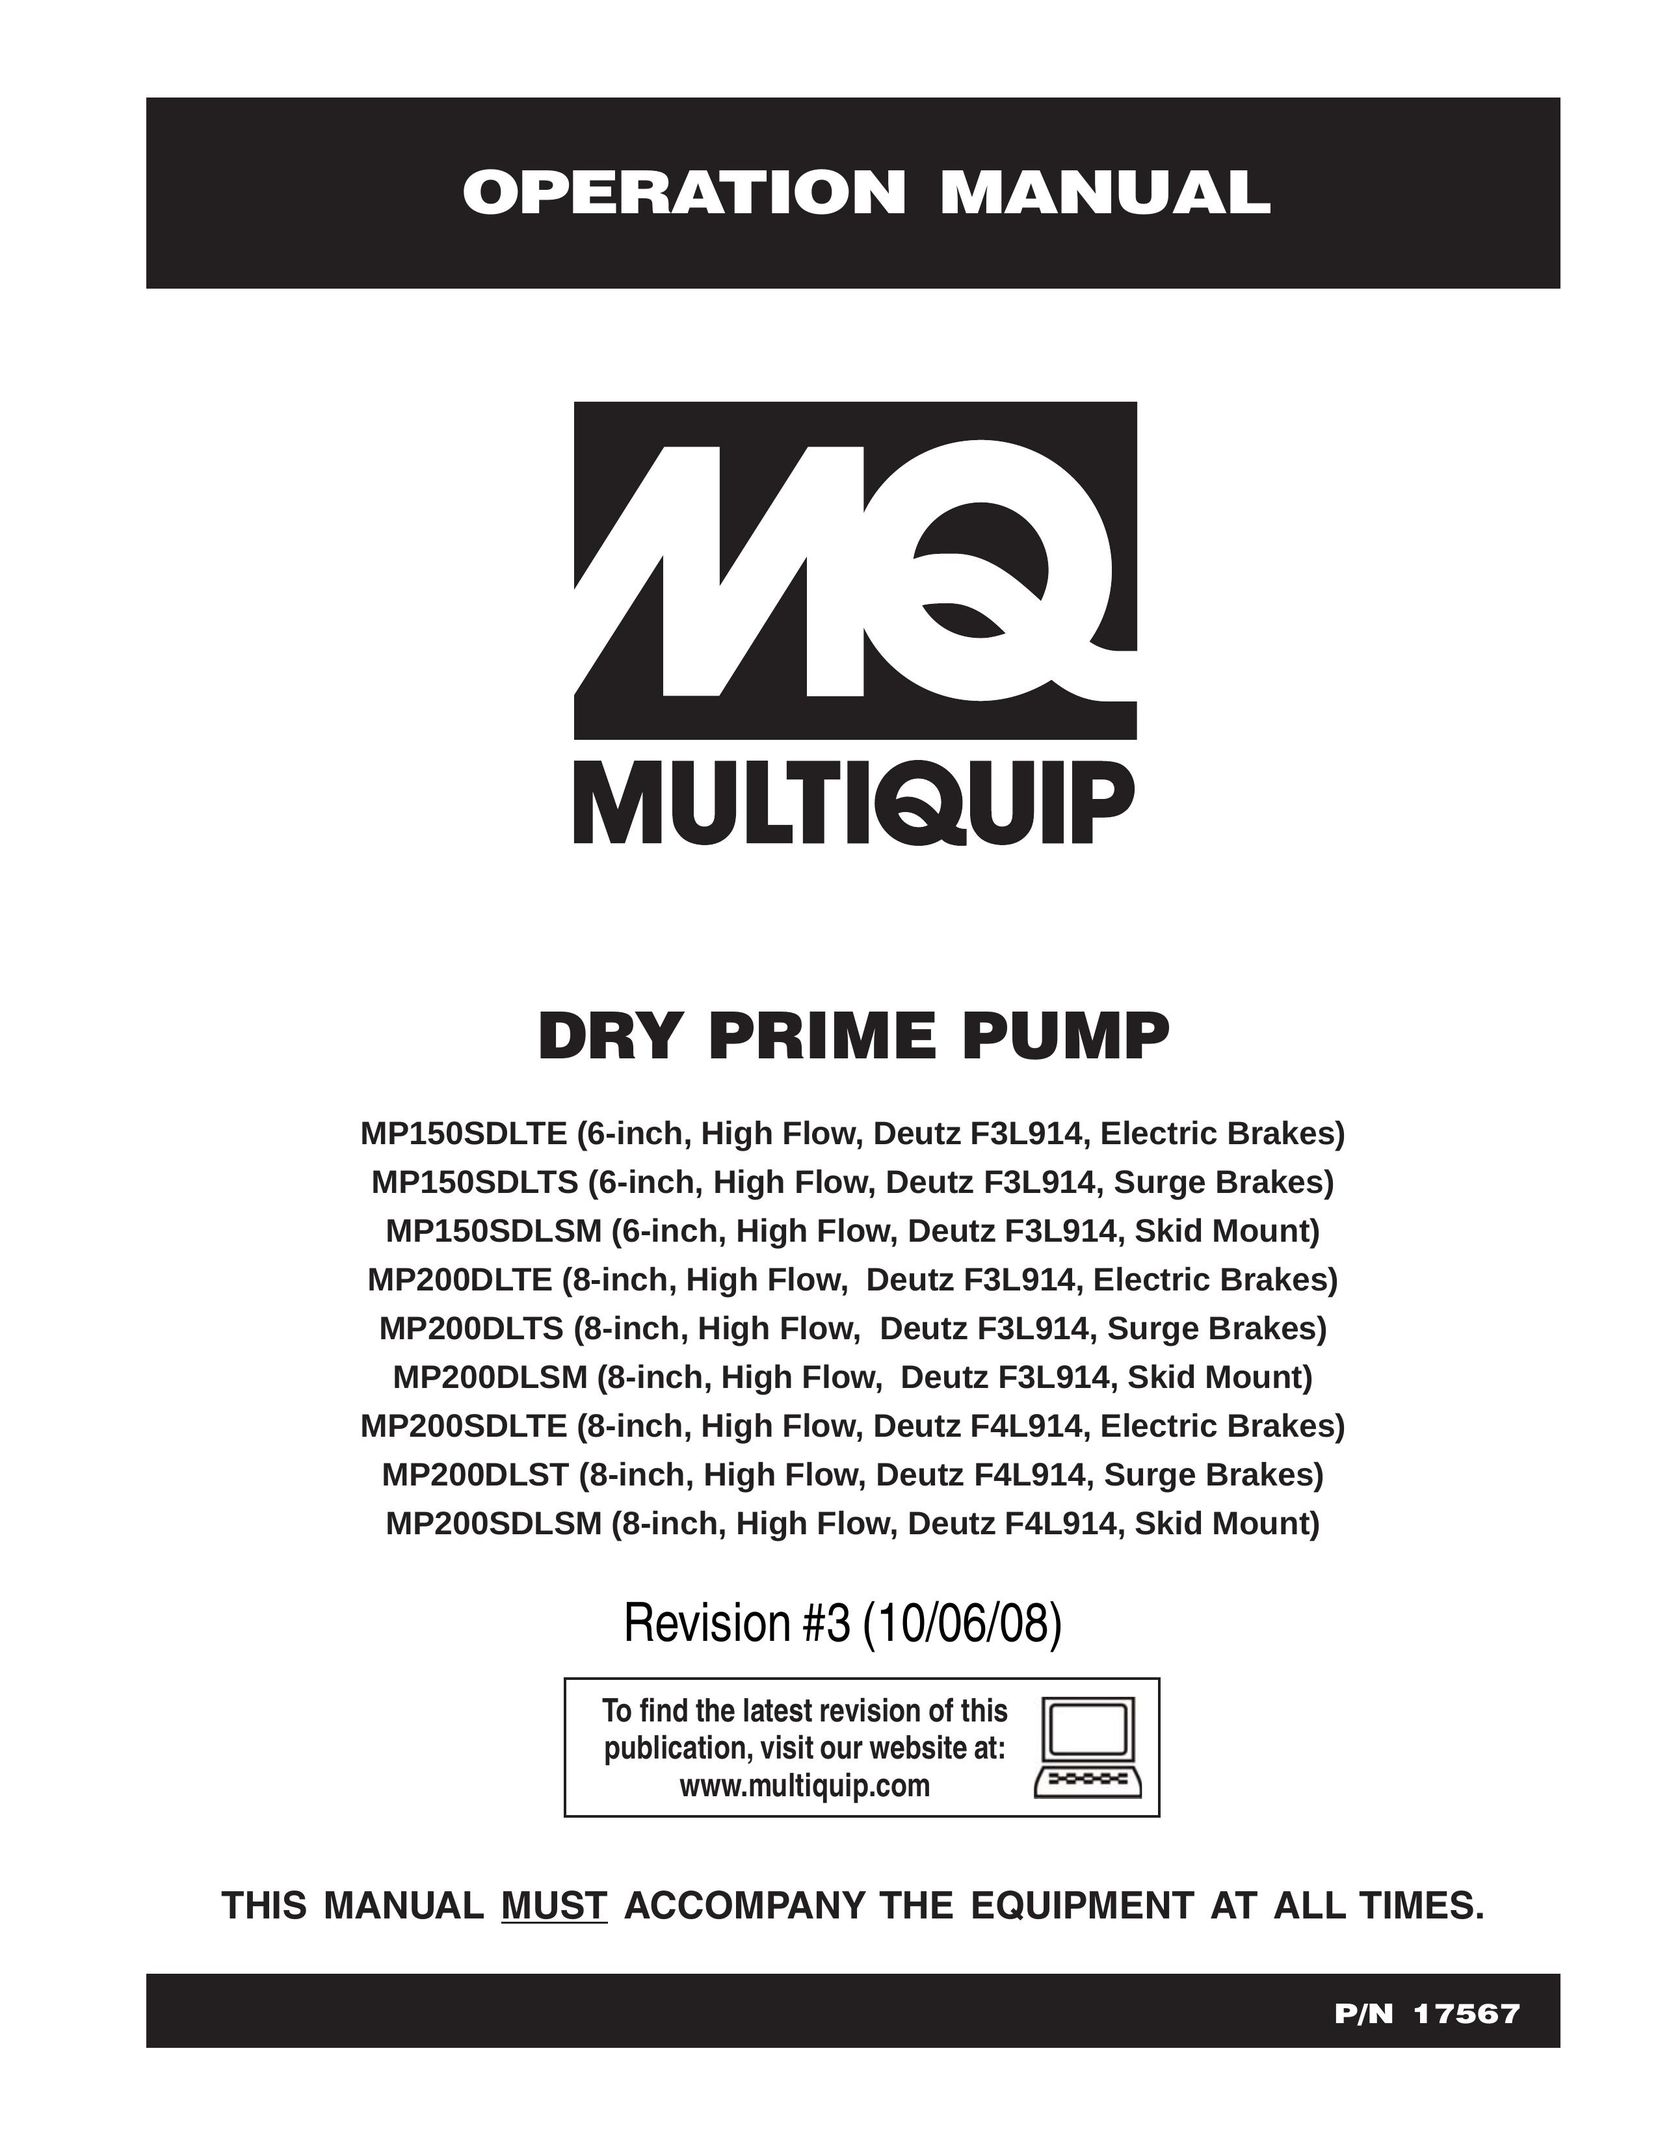 Multiquip MP150SDLTS Heat Pump User Manual